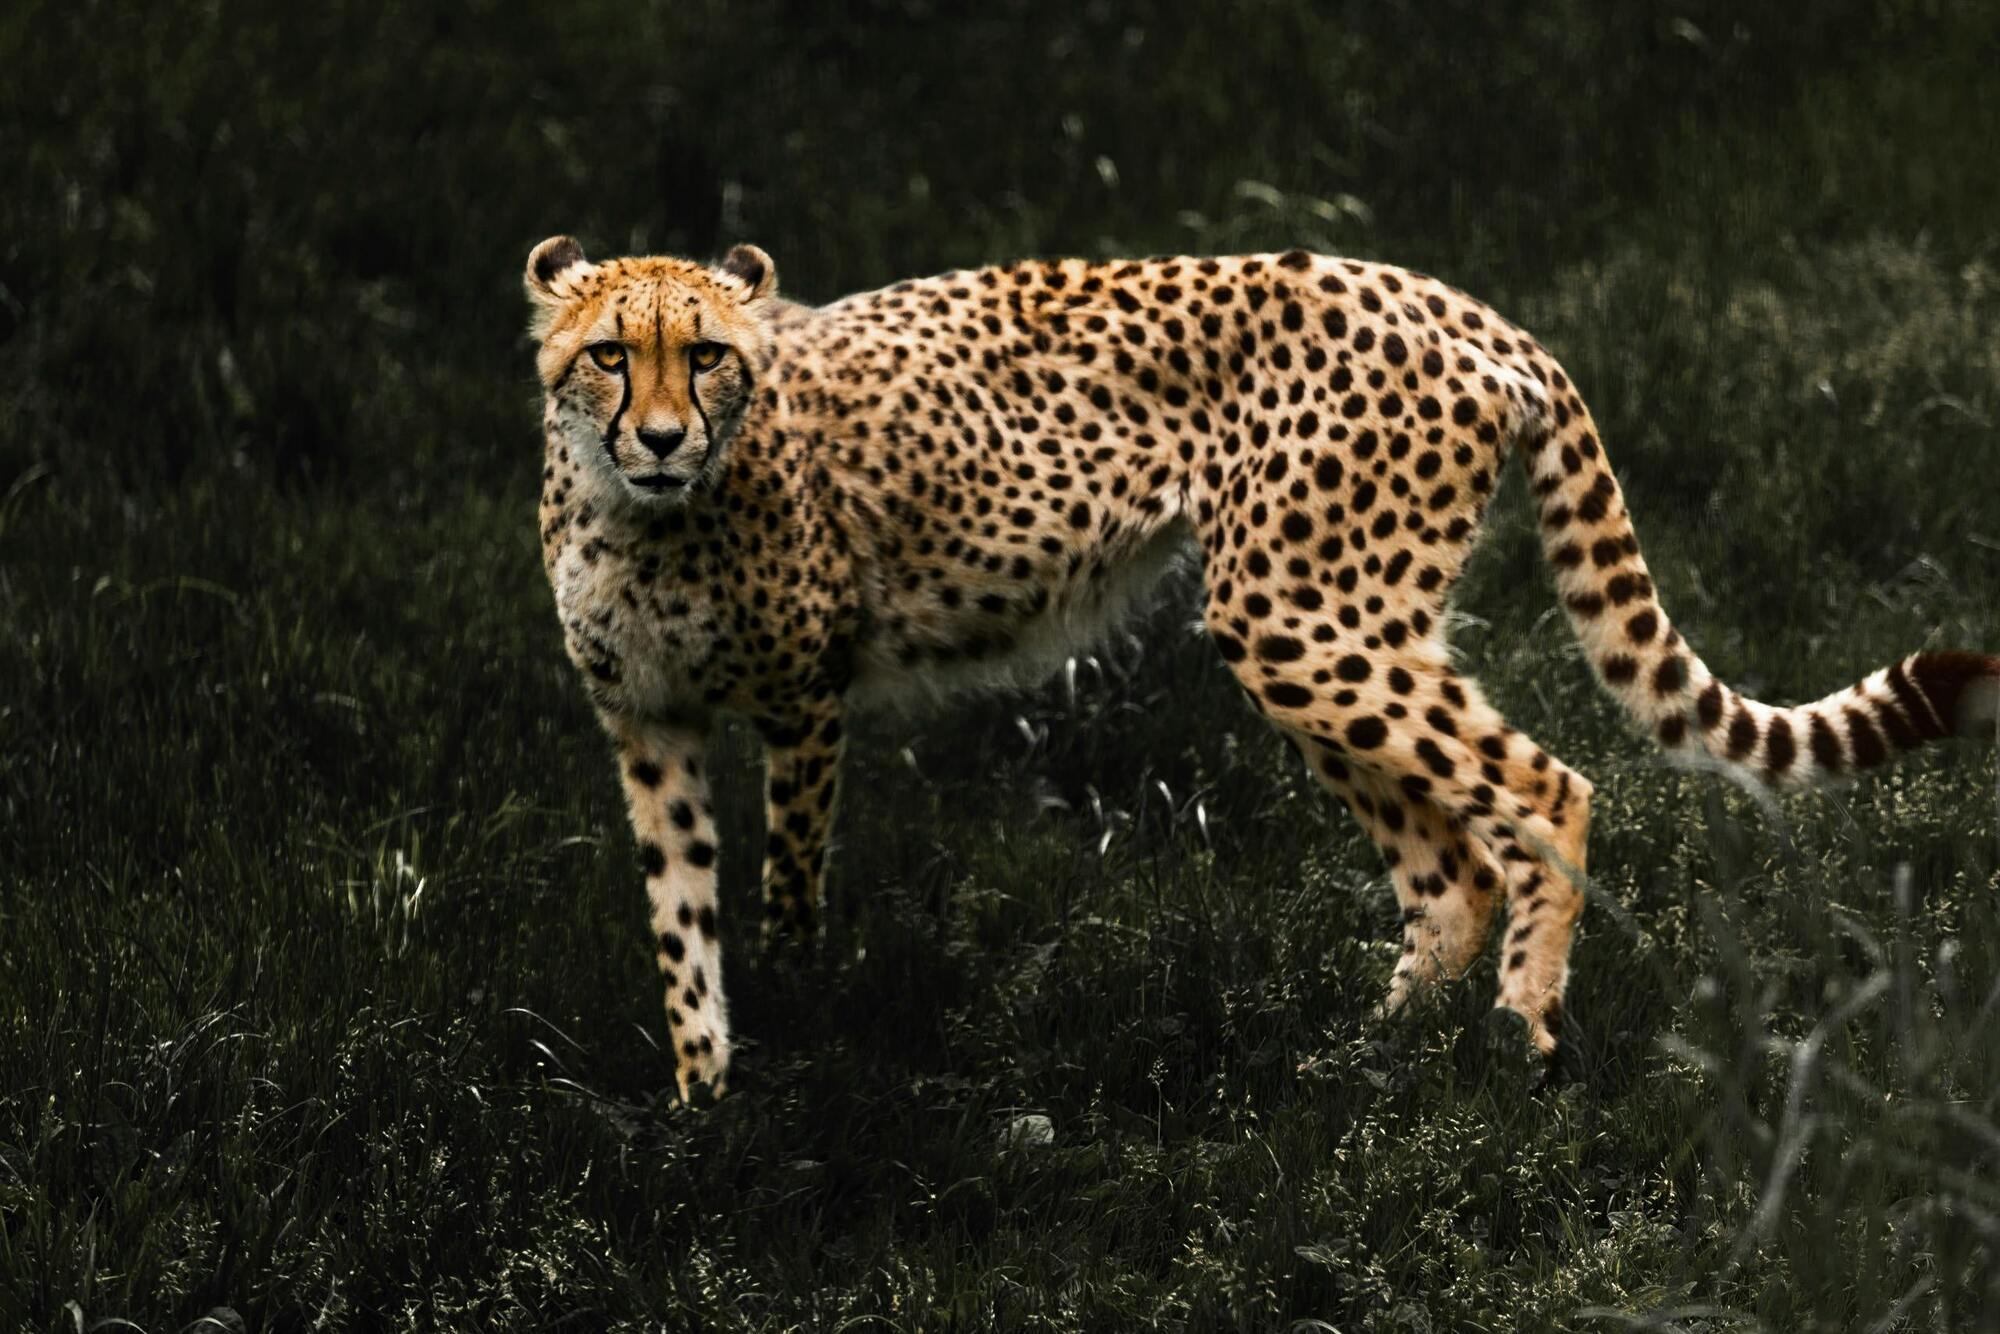 The cheetah is the spirit animal of Aries